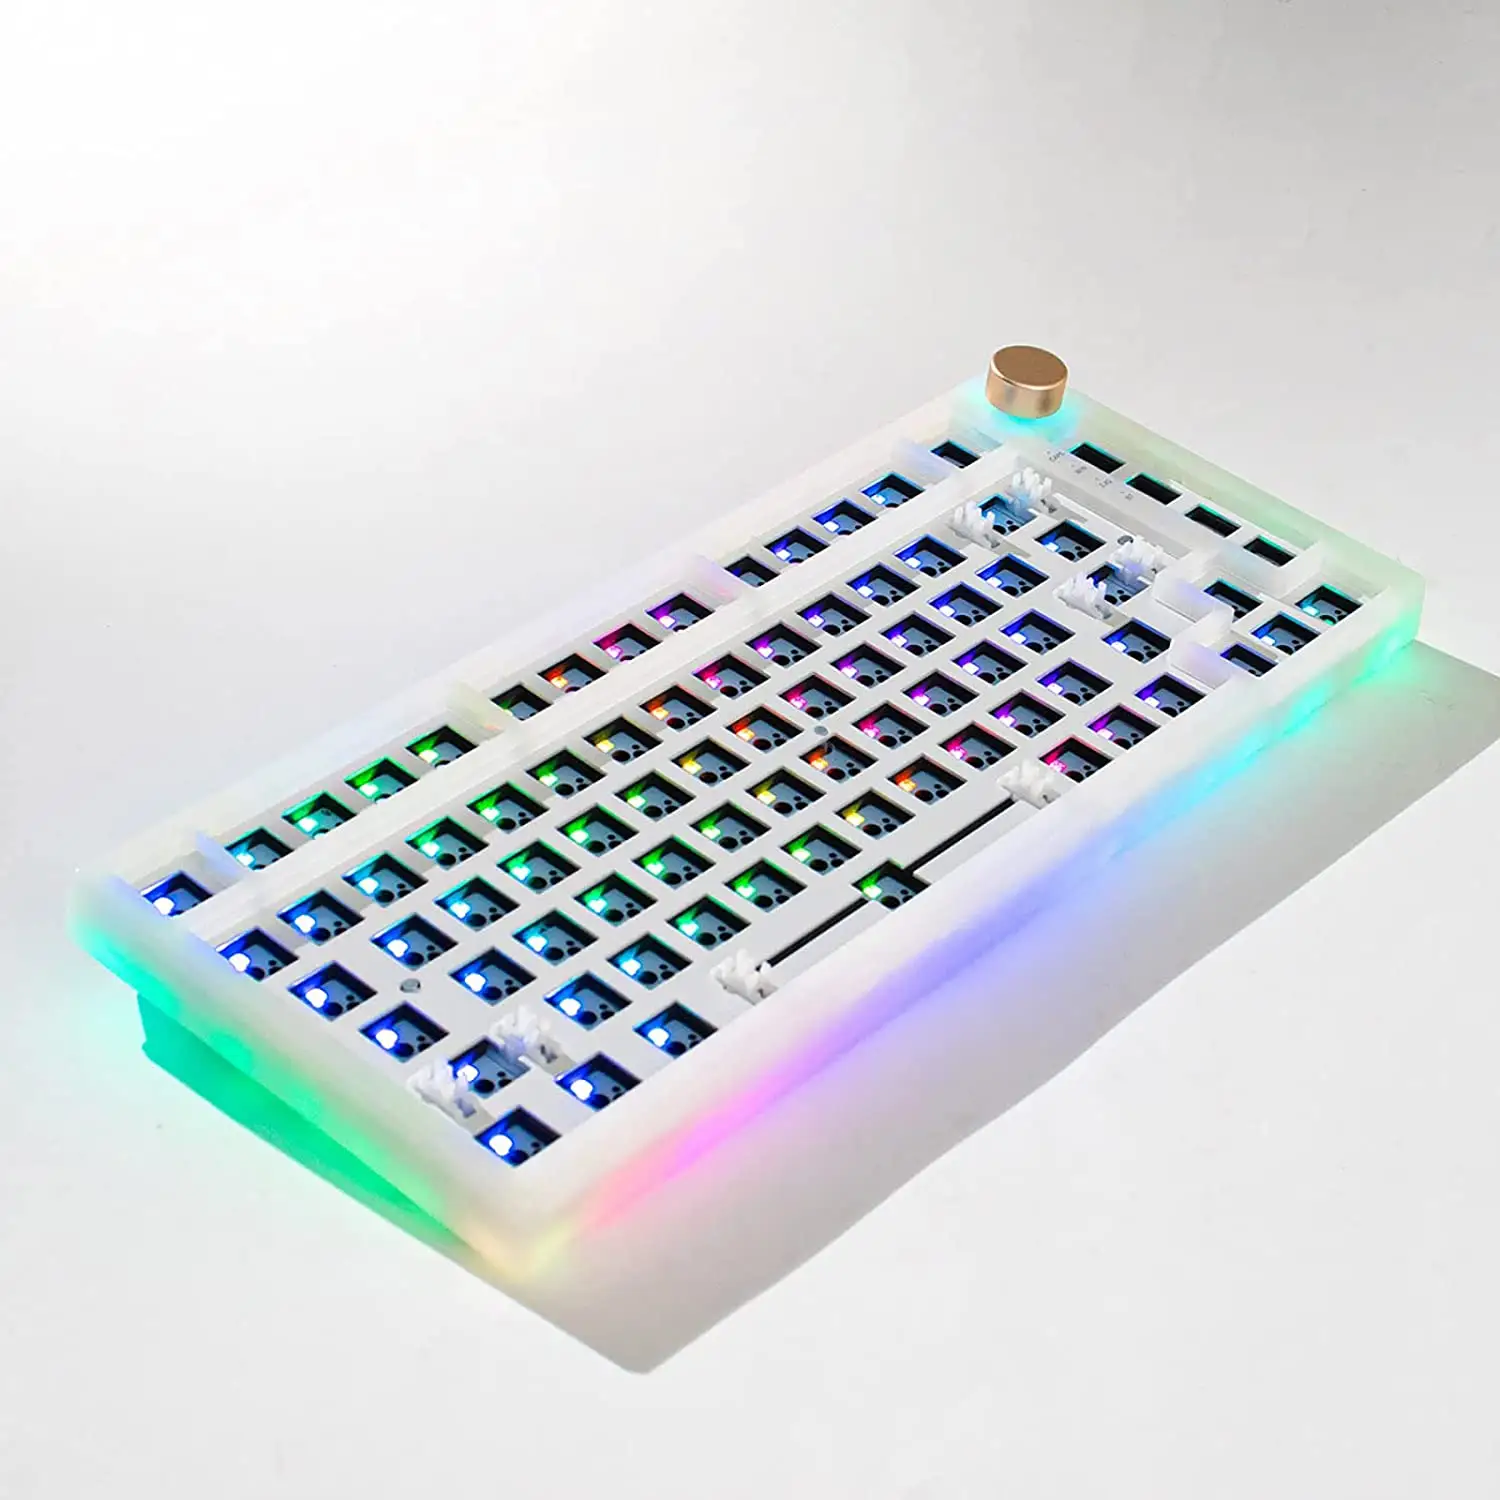 60 Percent OEM Mechanical Keyboard DIY Kit Aluminum CNC Development RGB Hot Swappable Keyboard Kit